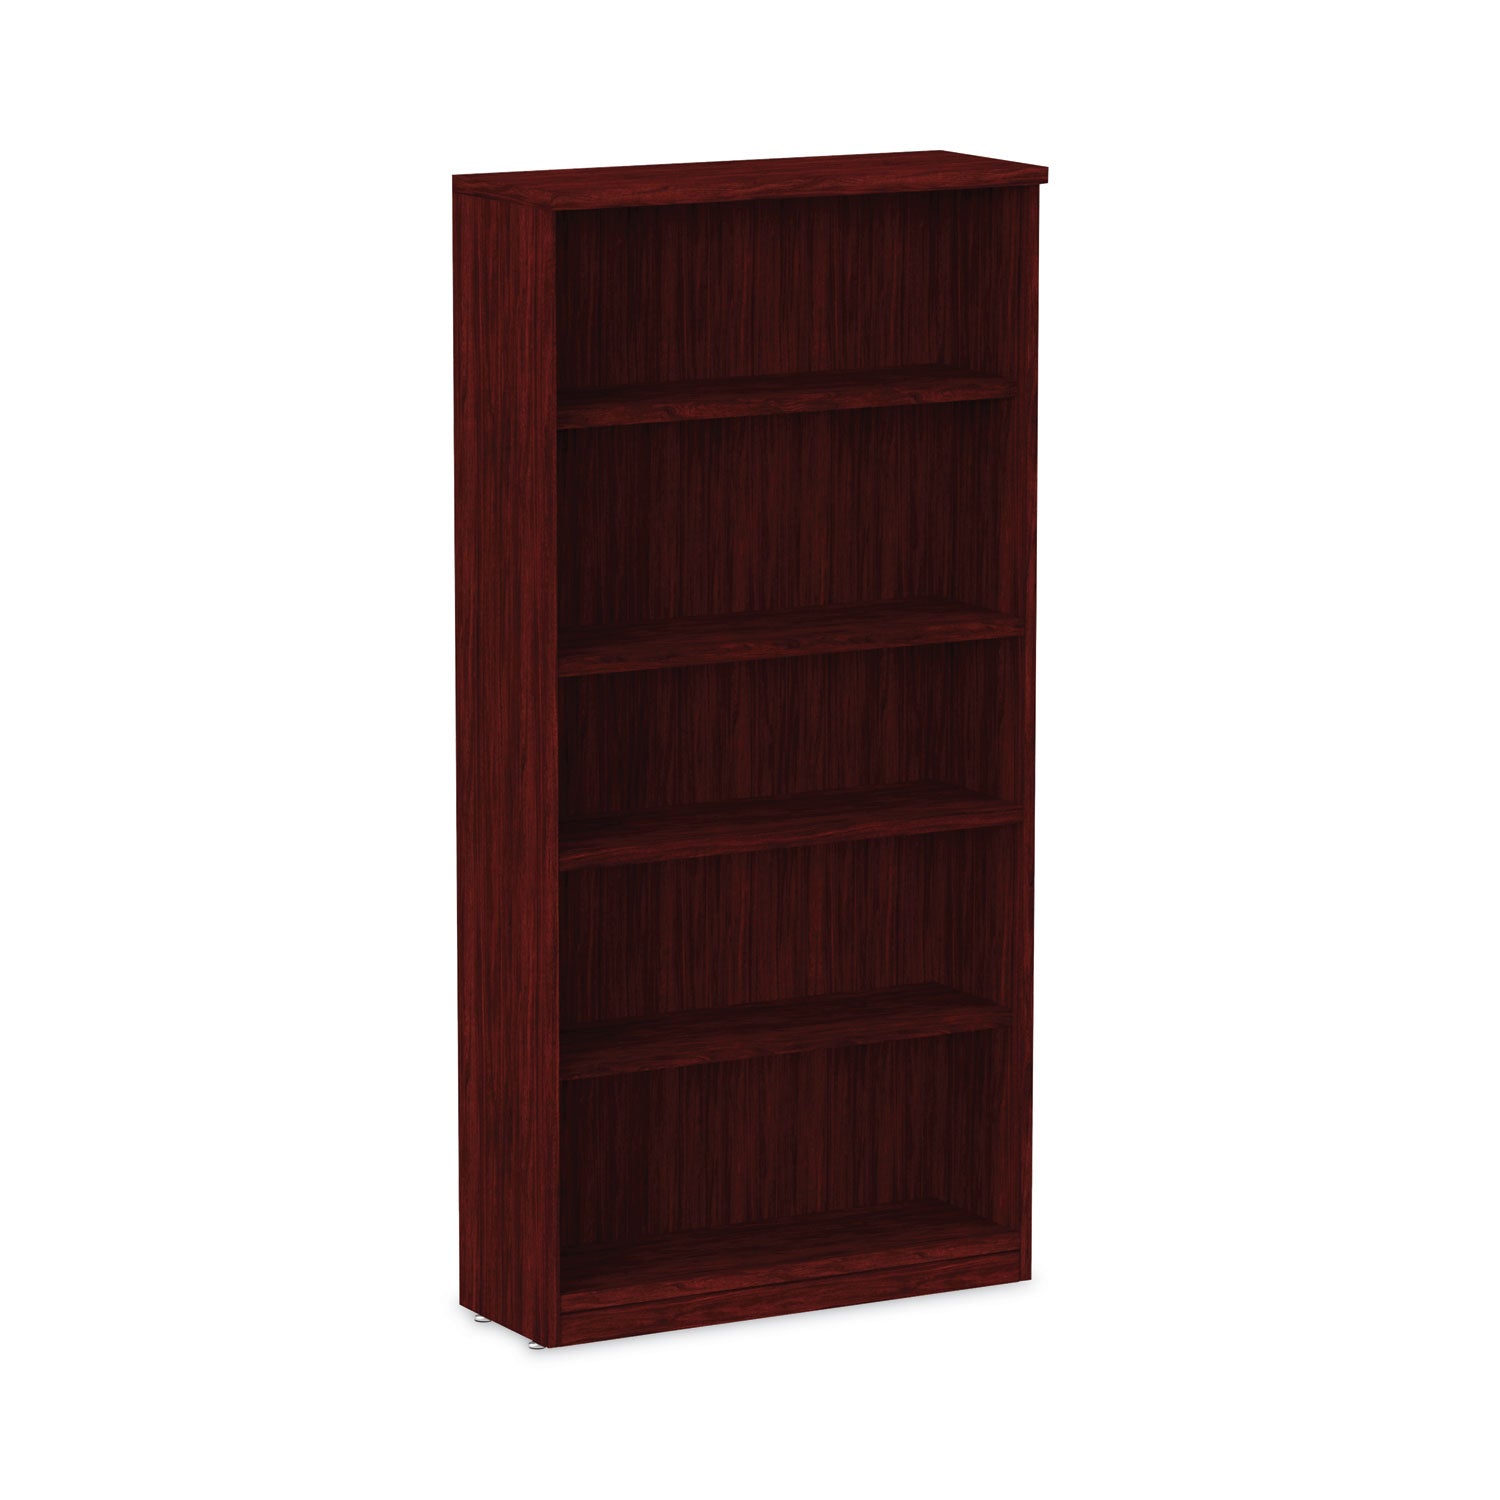 Alera Valencia Series Bookcase, Five-Shelf, 31.75w x 14d x 64.75h, Mahogany - 